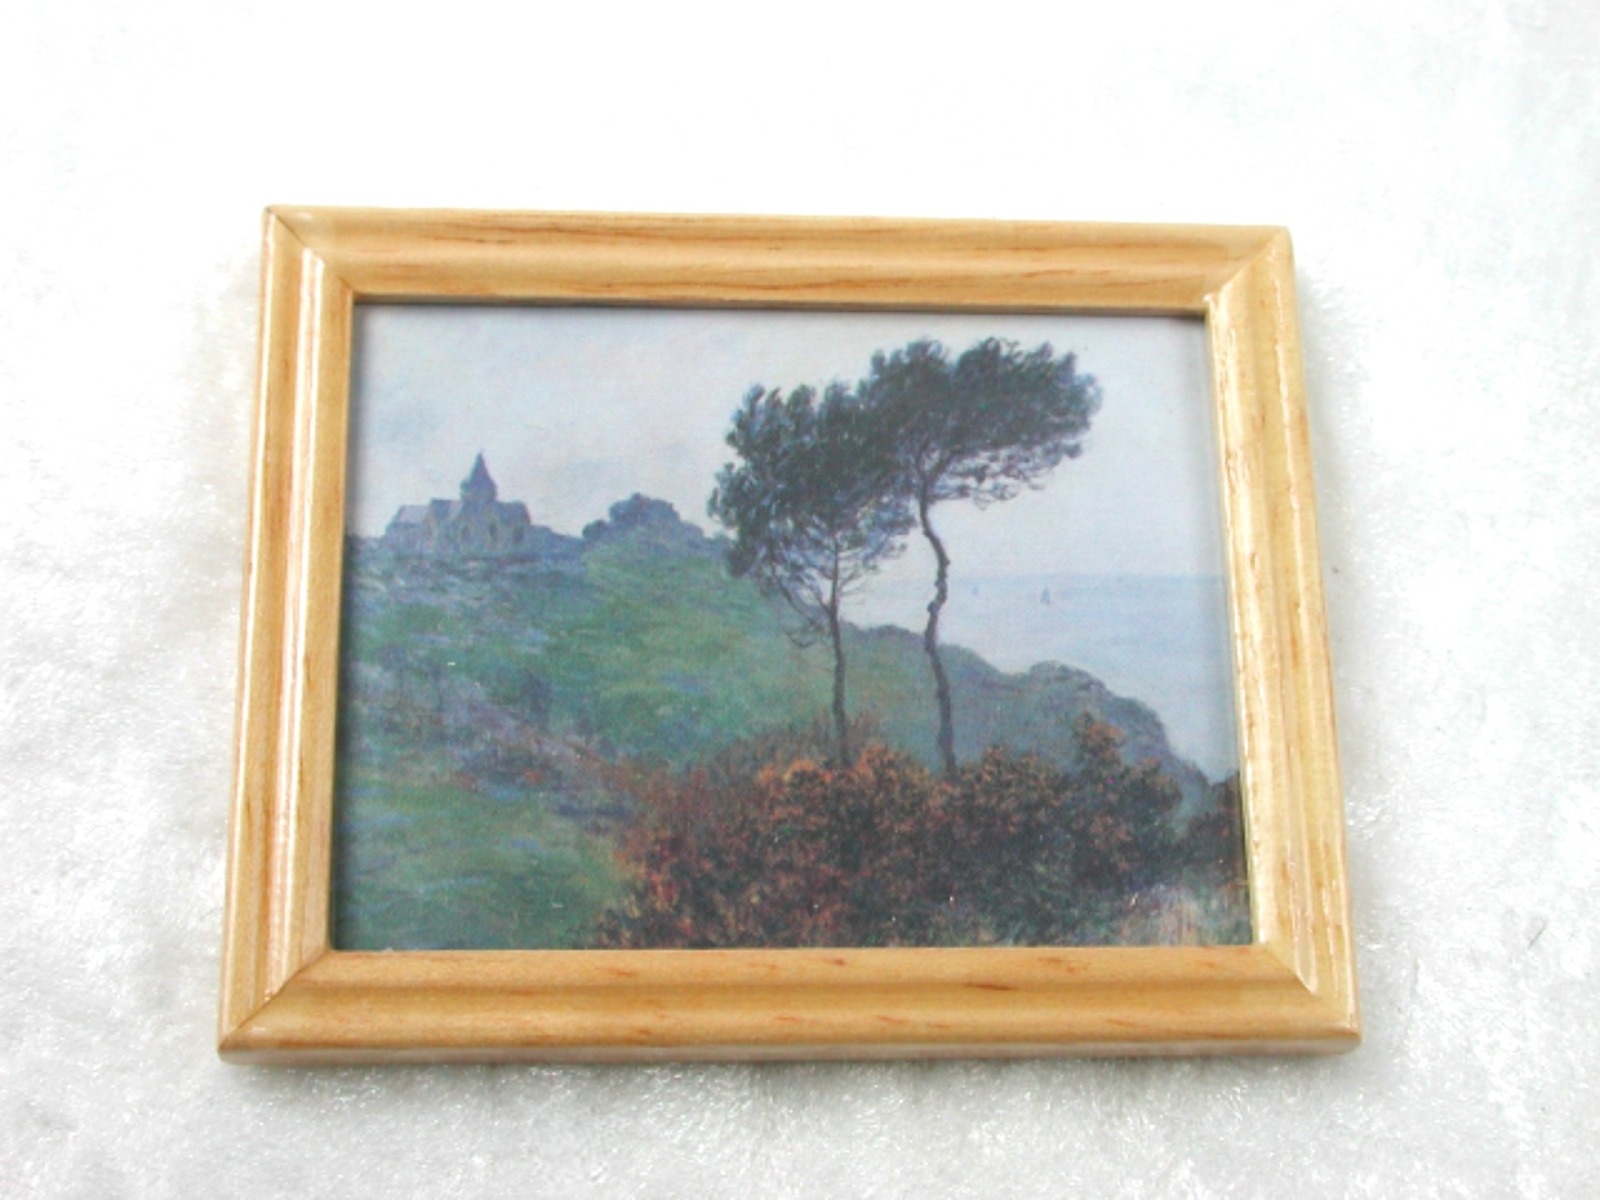 Gemäldekopie Varengeville im Holzrahmen 7 x 5,5 x 0,5 cm